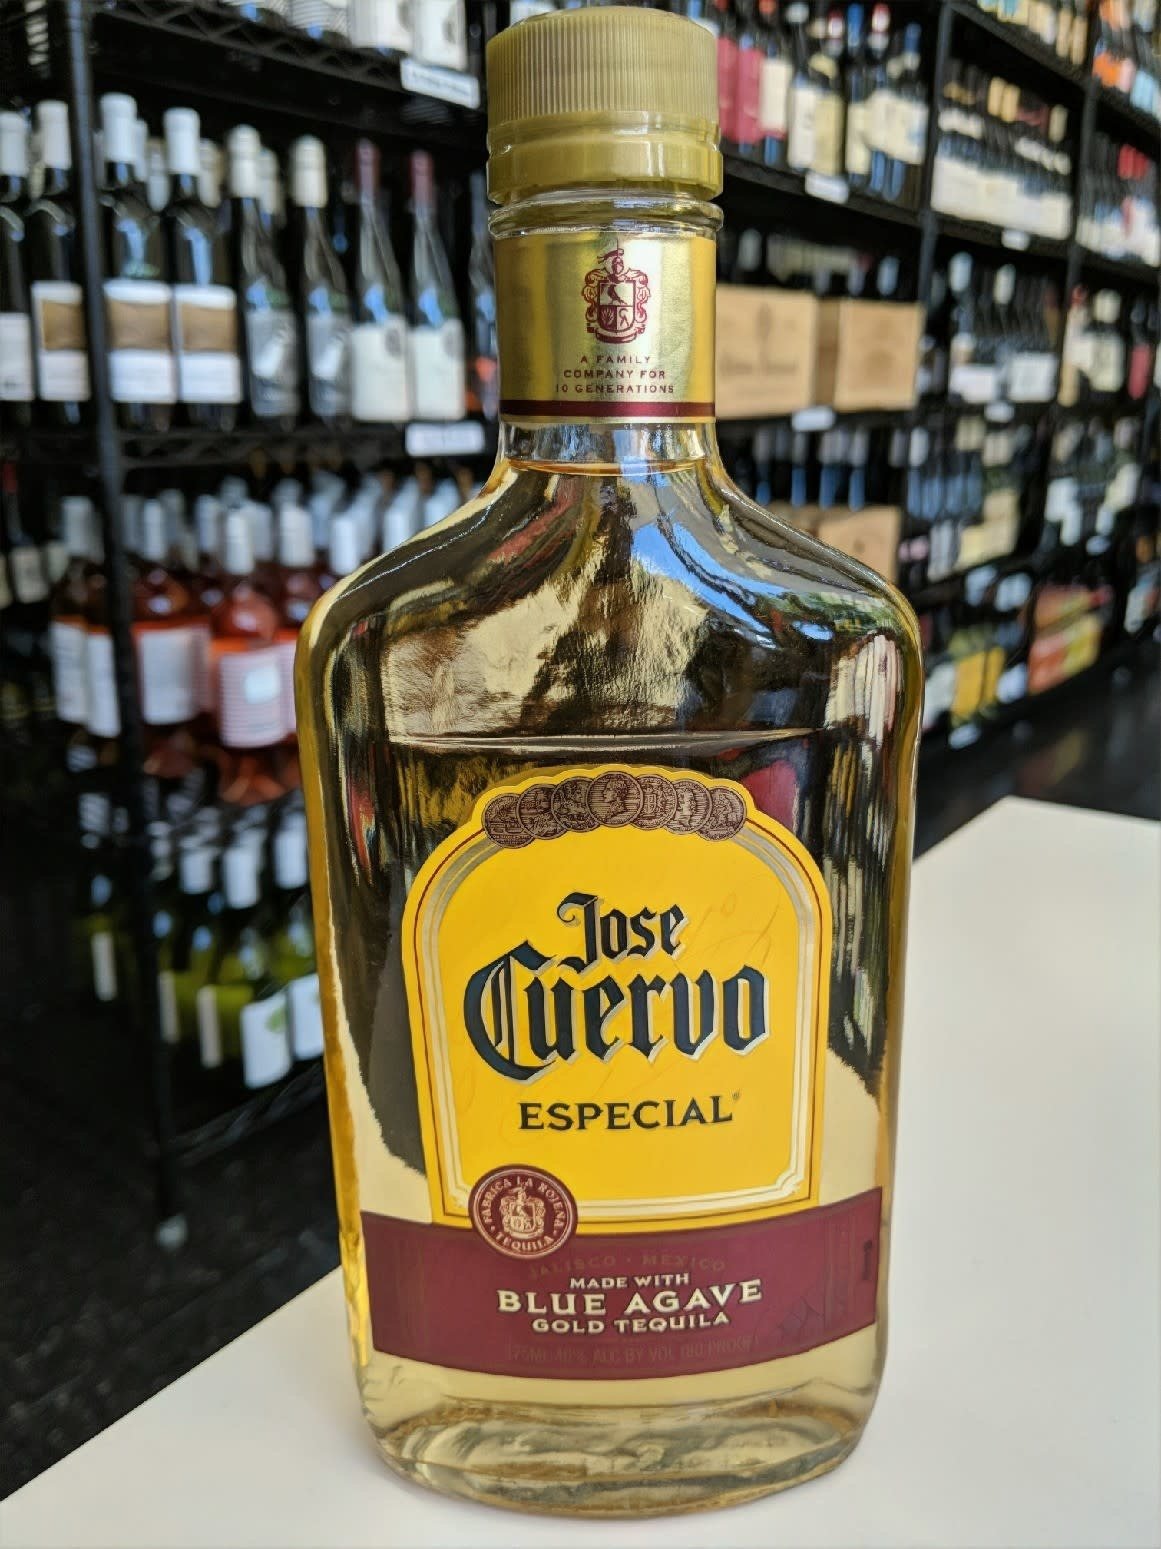 jose cuervo tequila